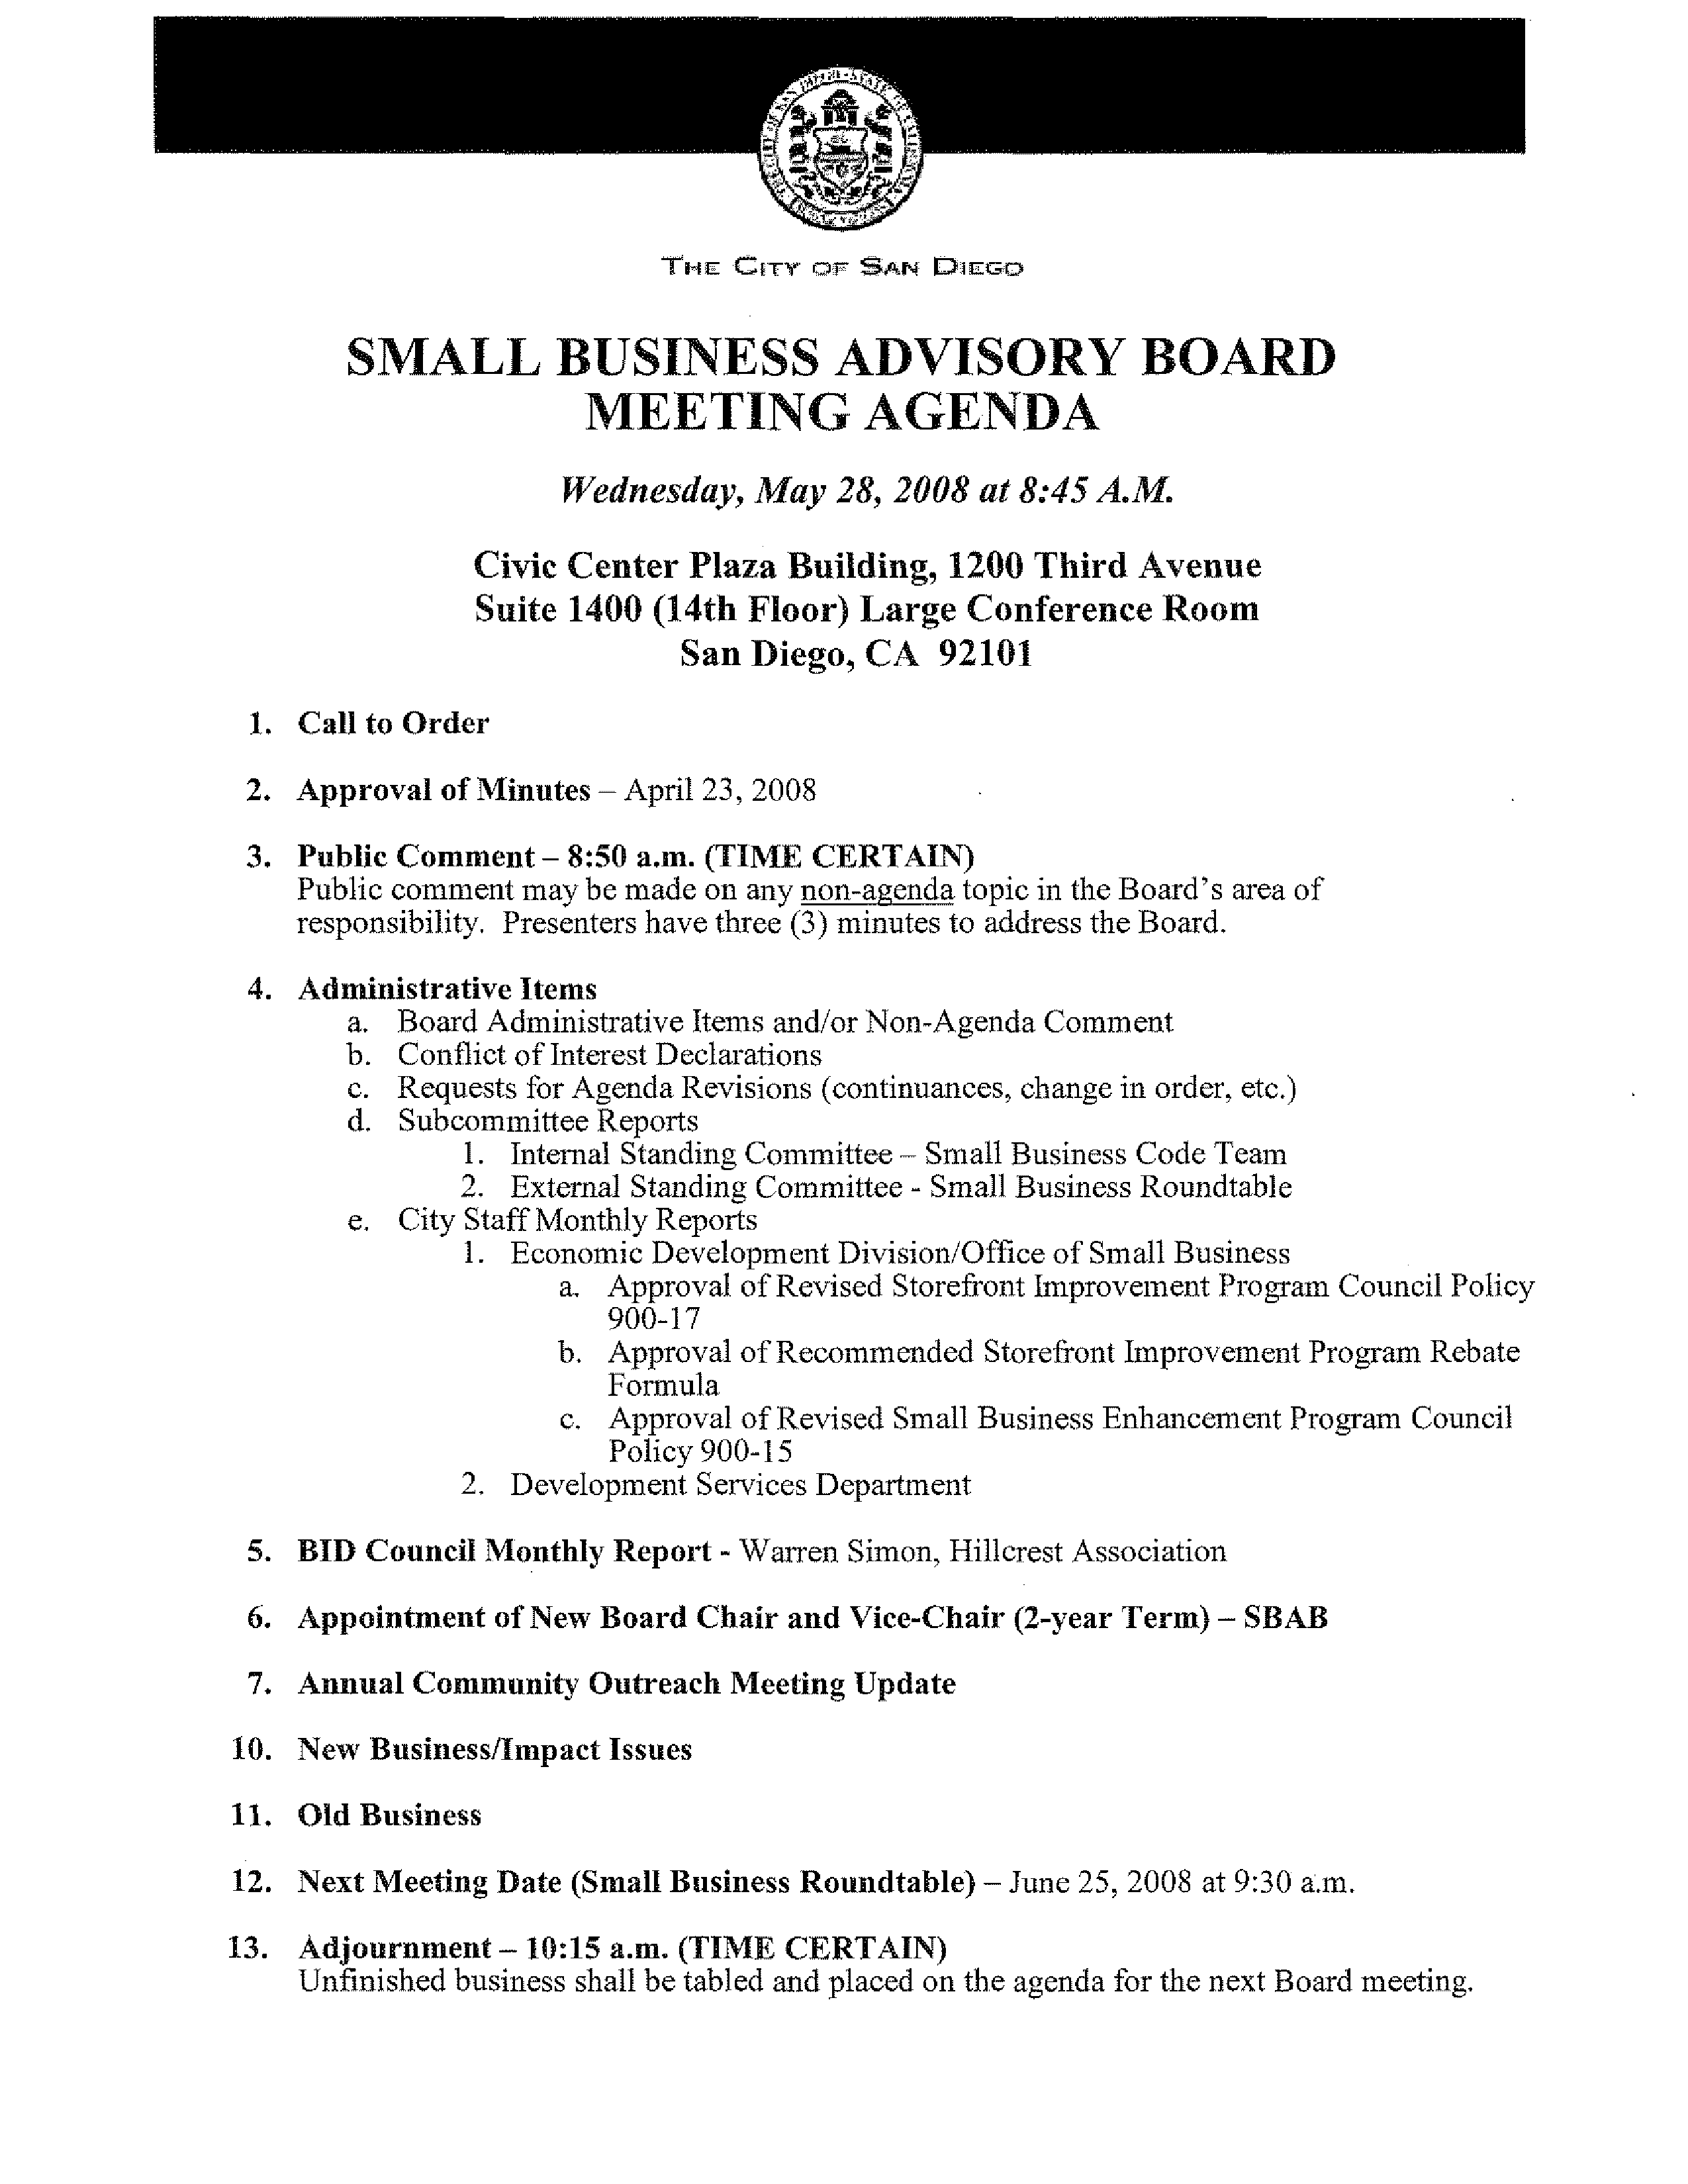 Small Business Board Meeting Agenda main image